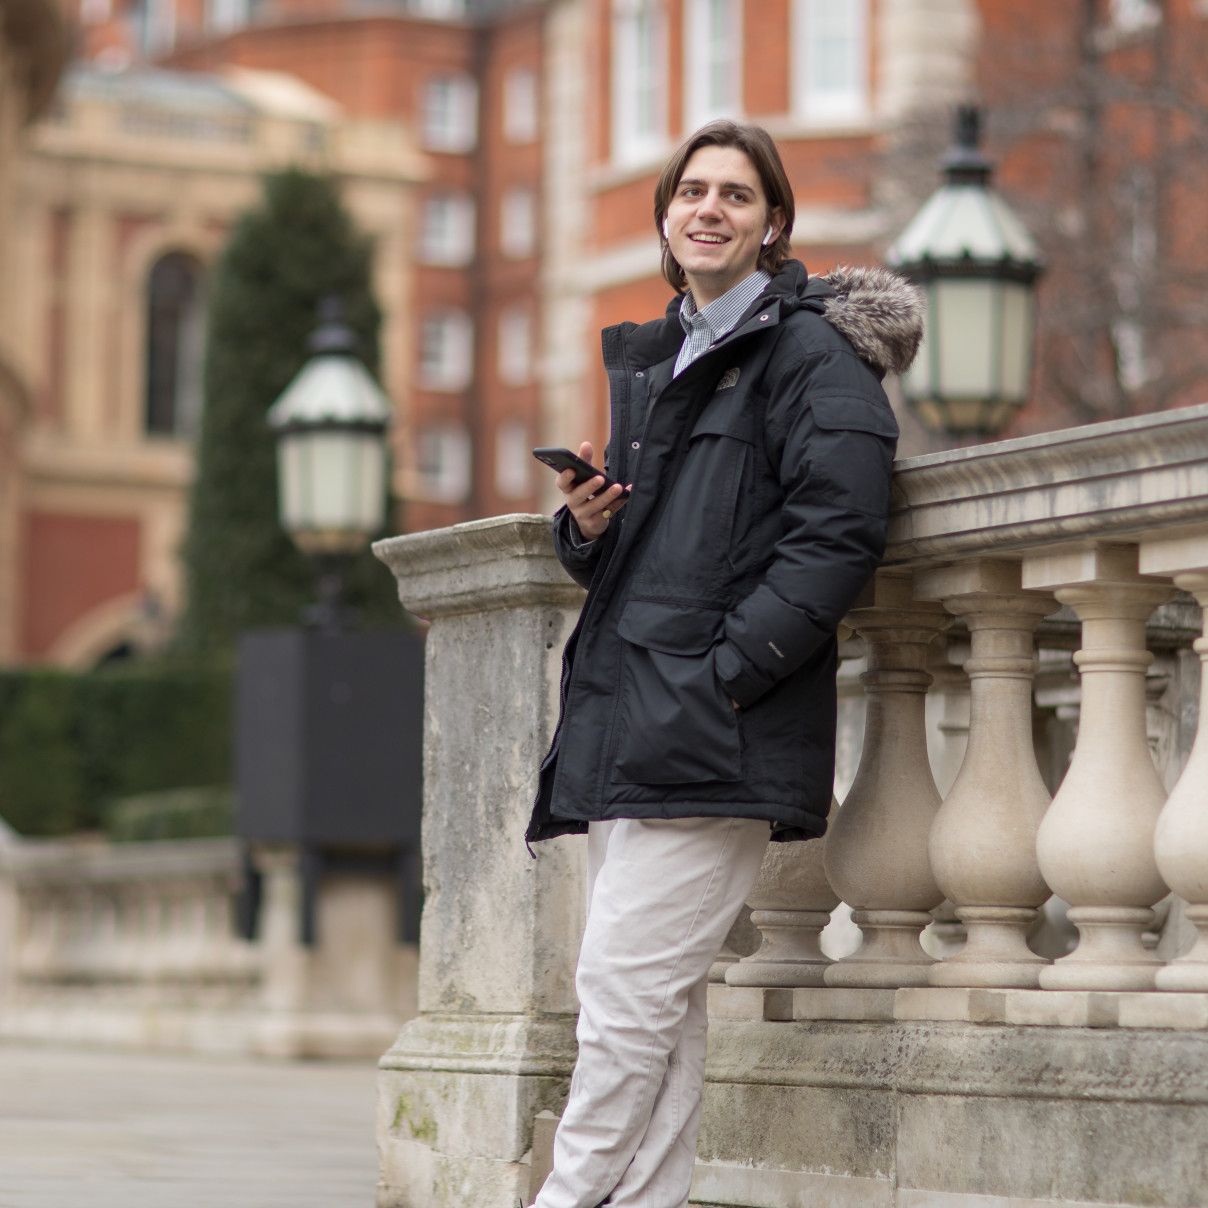 A student outside the Royal Albert Hall